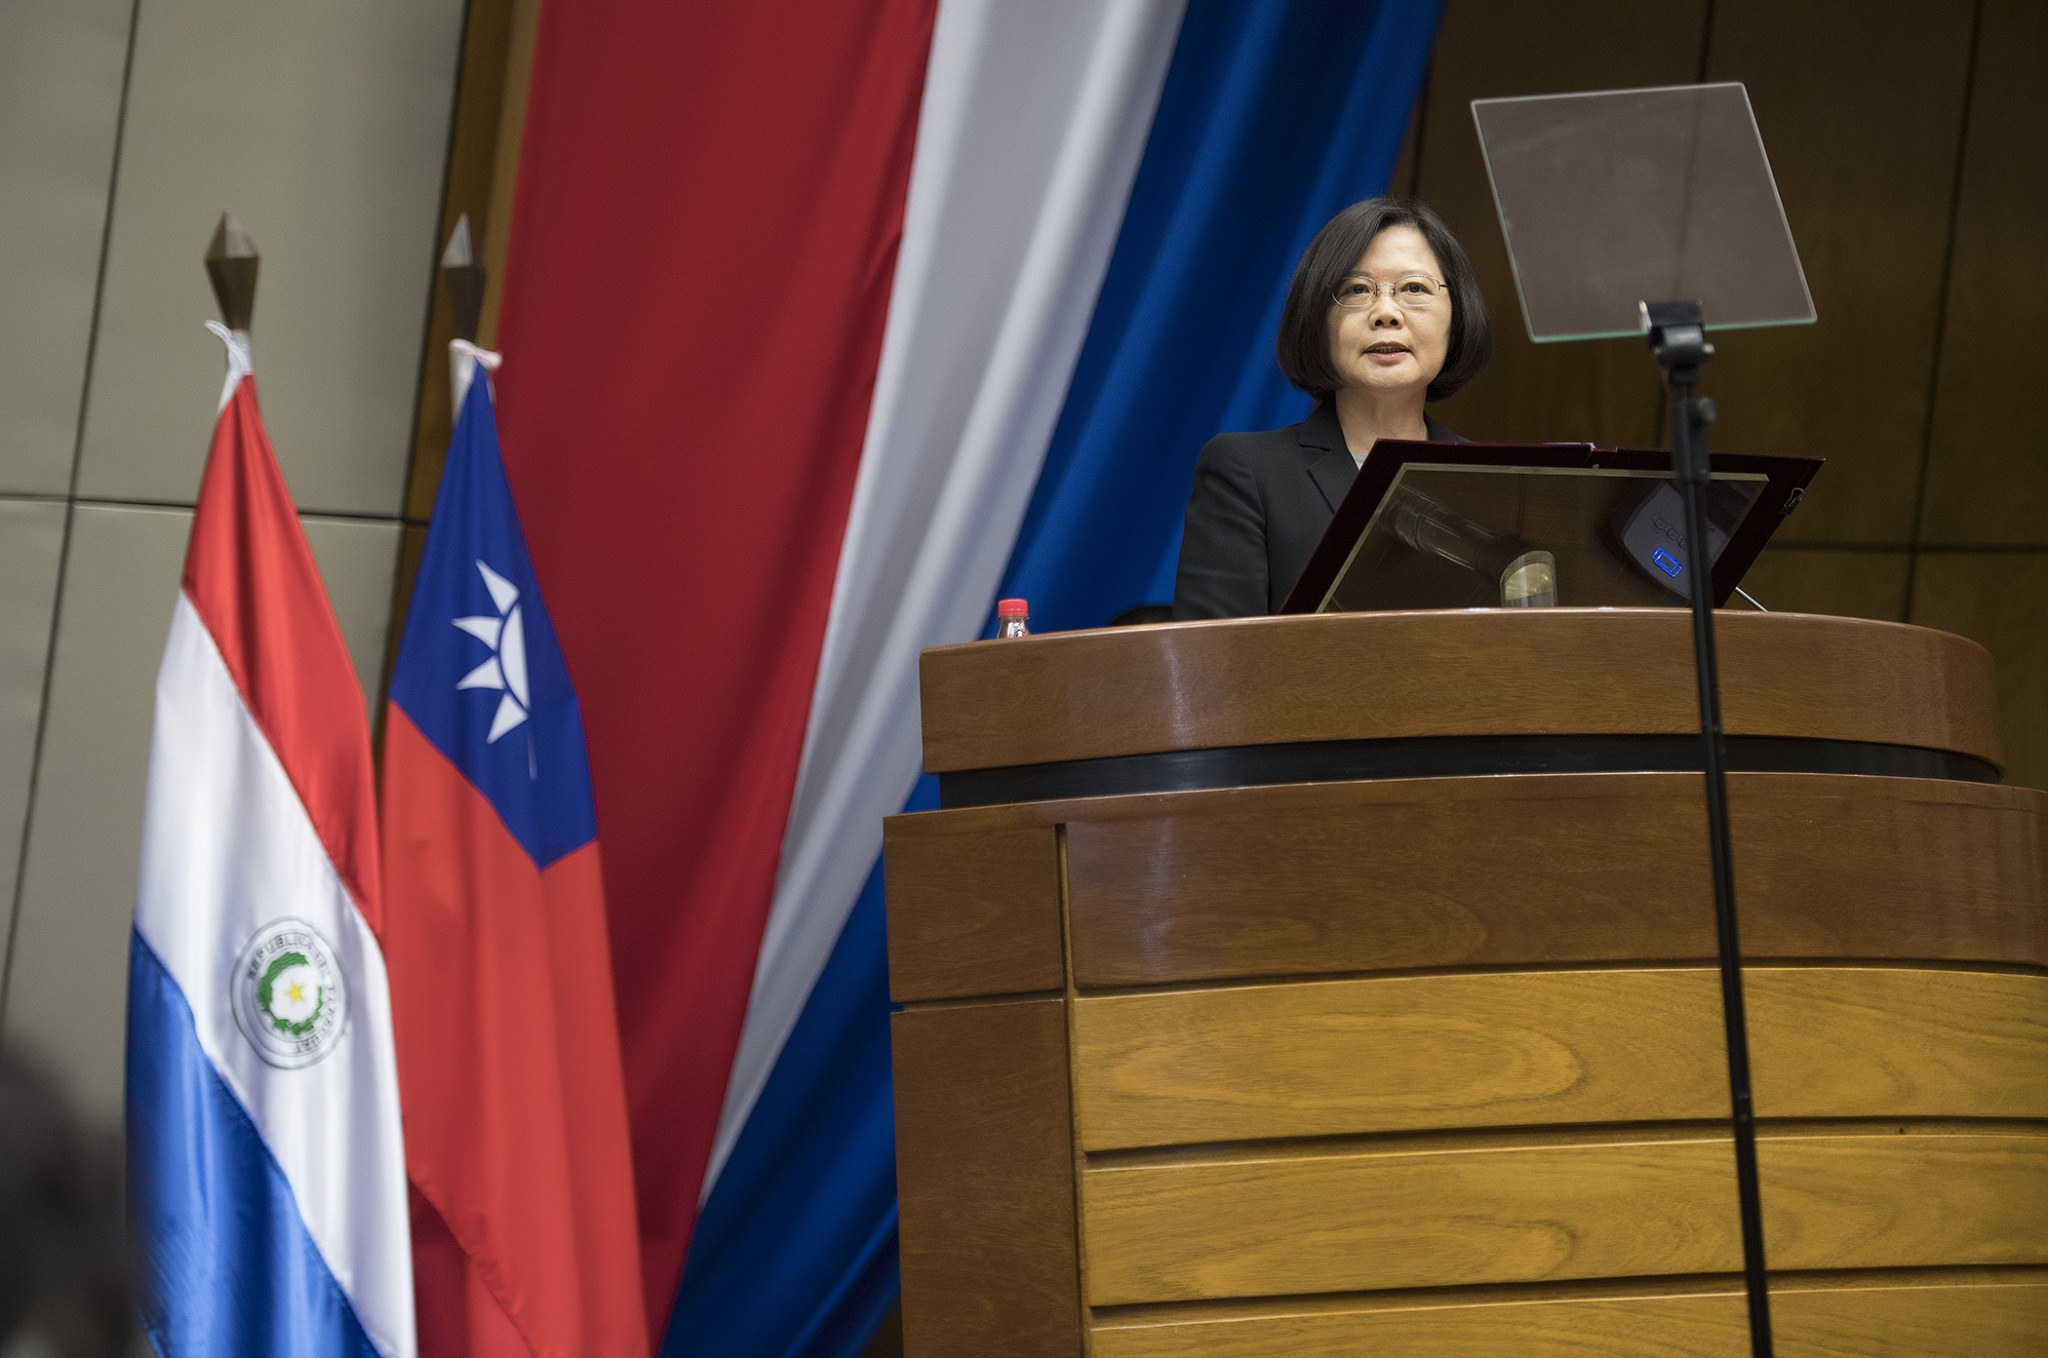 President Tsai delivers address before Paraguayan Congress